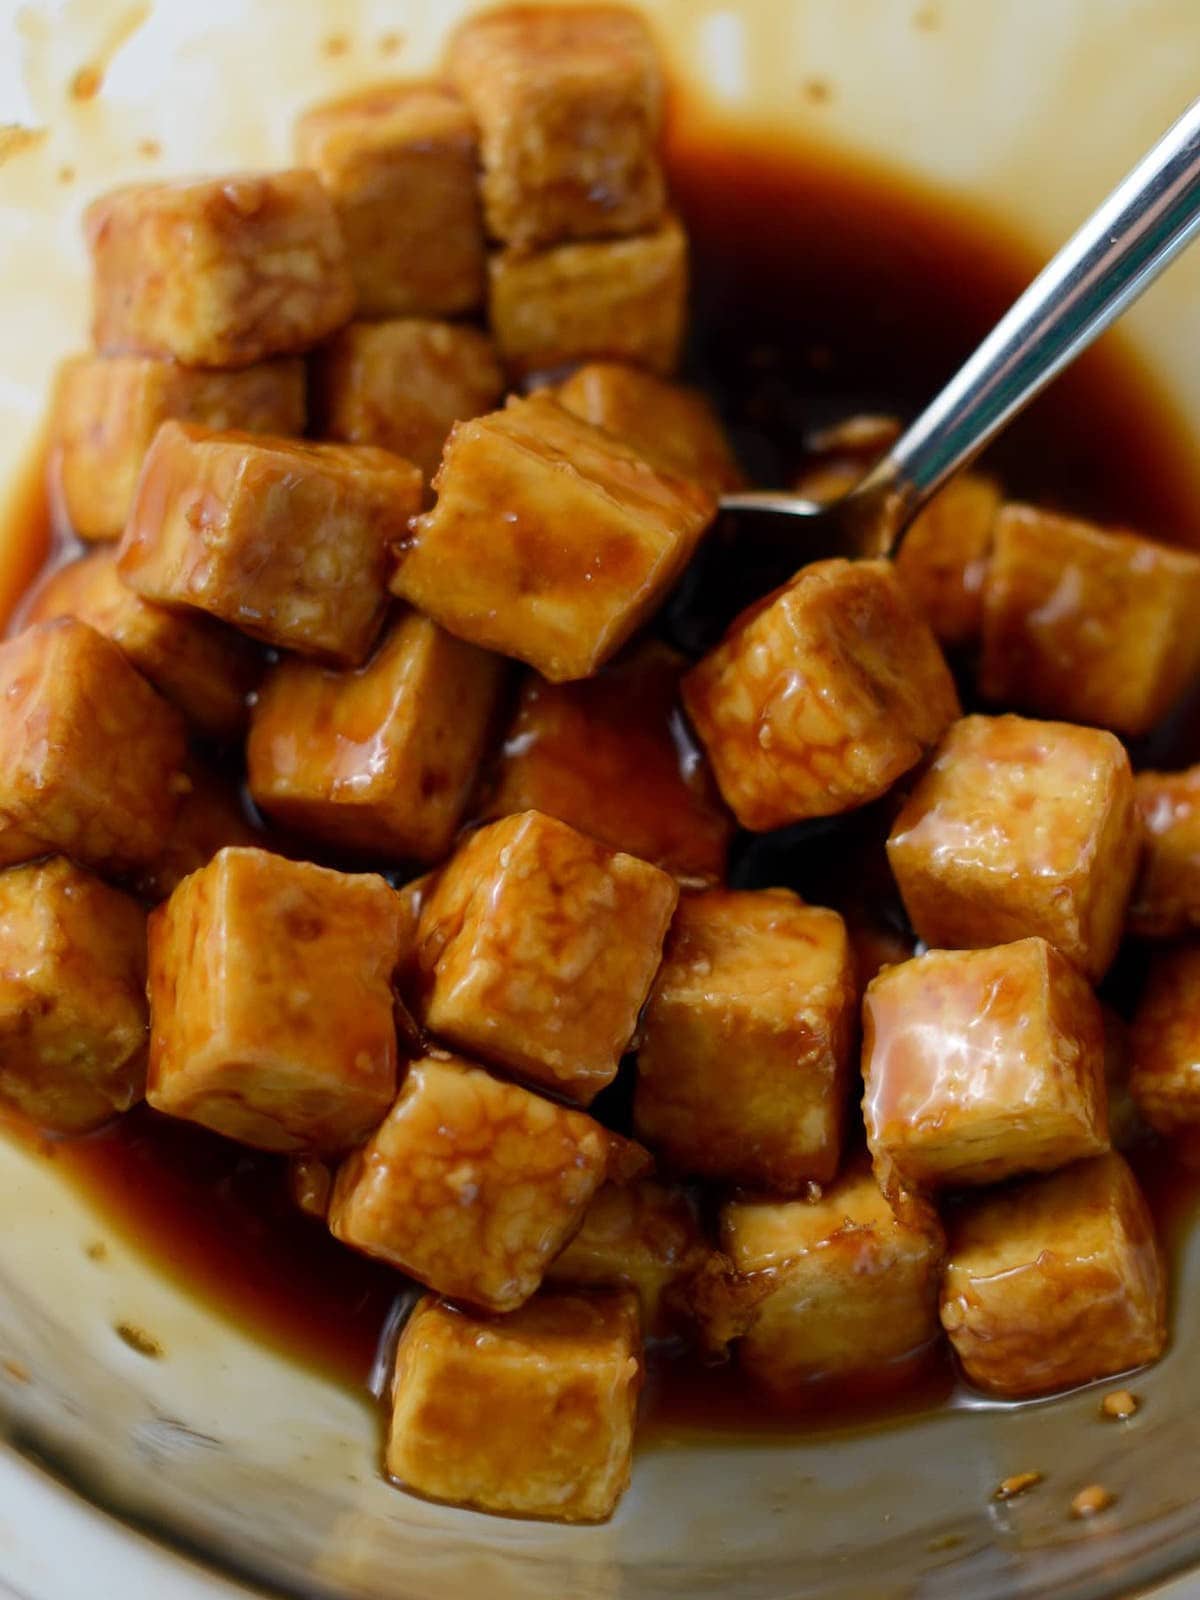 This is a photo of marinated teriyaki tofu.